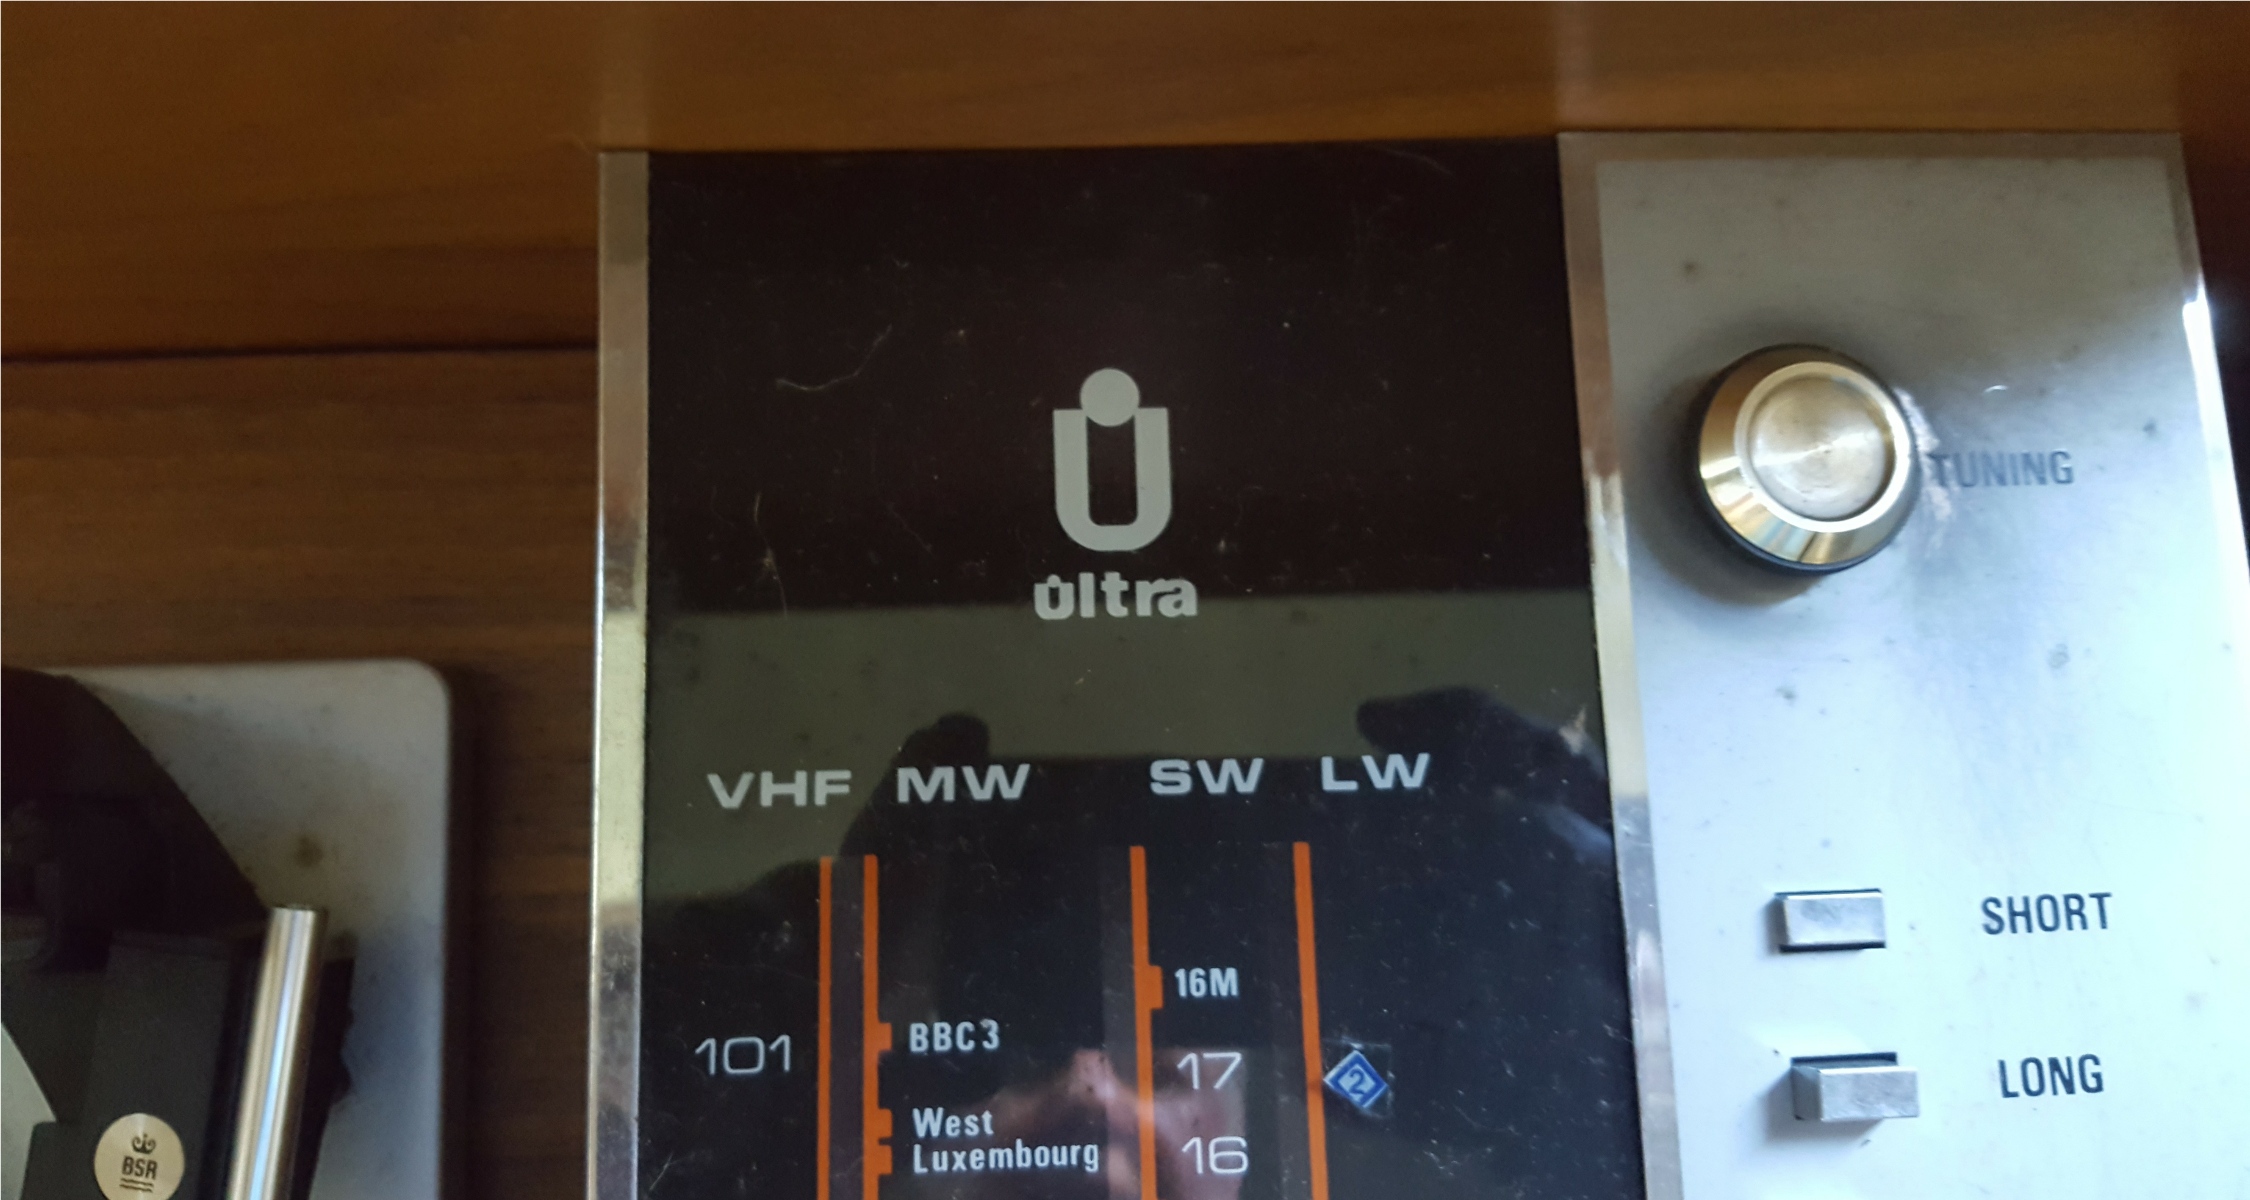 Vintage Retro Ultra Transistor Radiogram Model 6330 Turntable Radio 1960's - Image 3 of 3